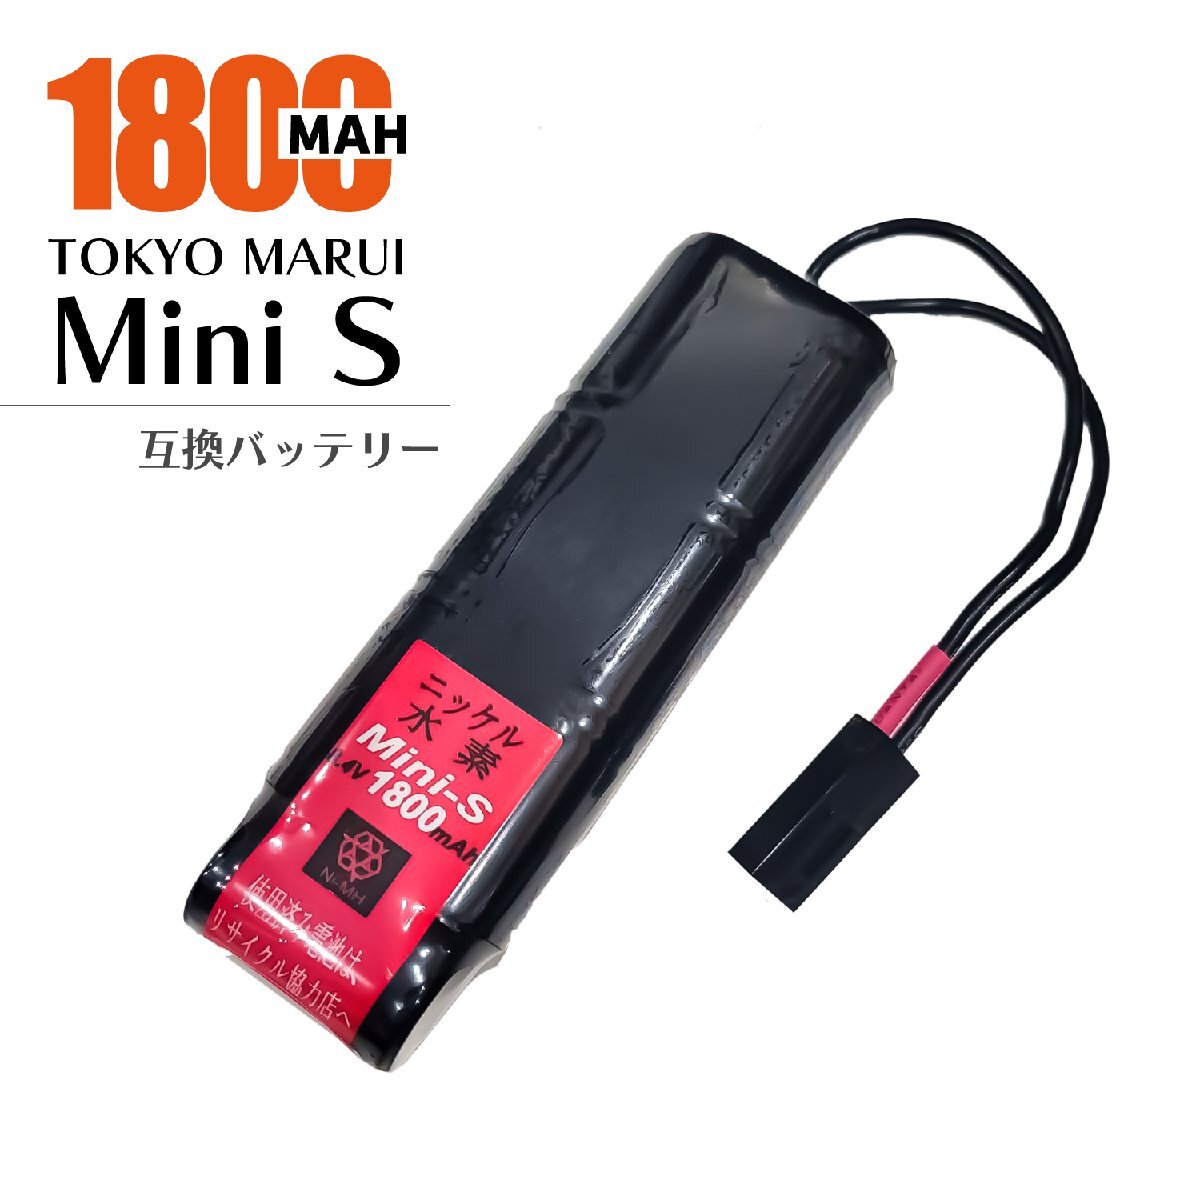 [1 year guarantee * free shipping ] Tokyo Marui Mini S interchangeable battery next generation * conventional electric gun for high capacity 1800mAh TOKYO MARUI mini-s mini s